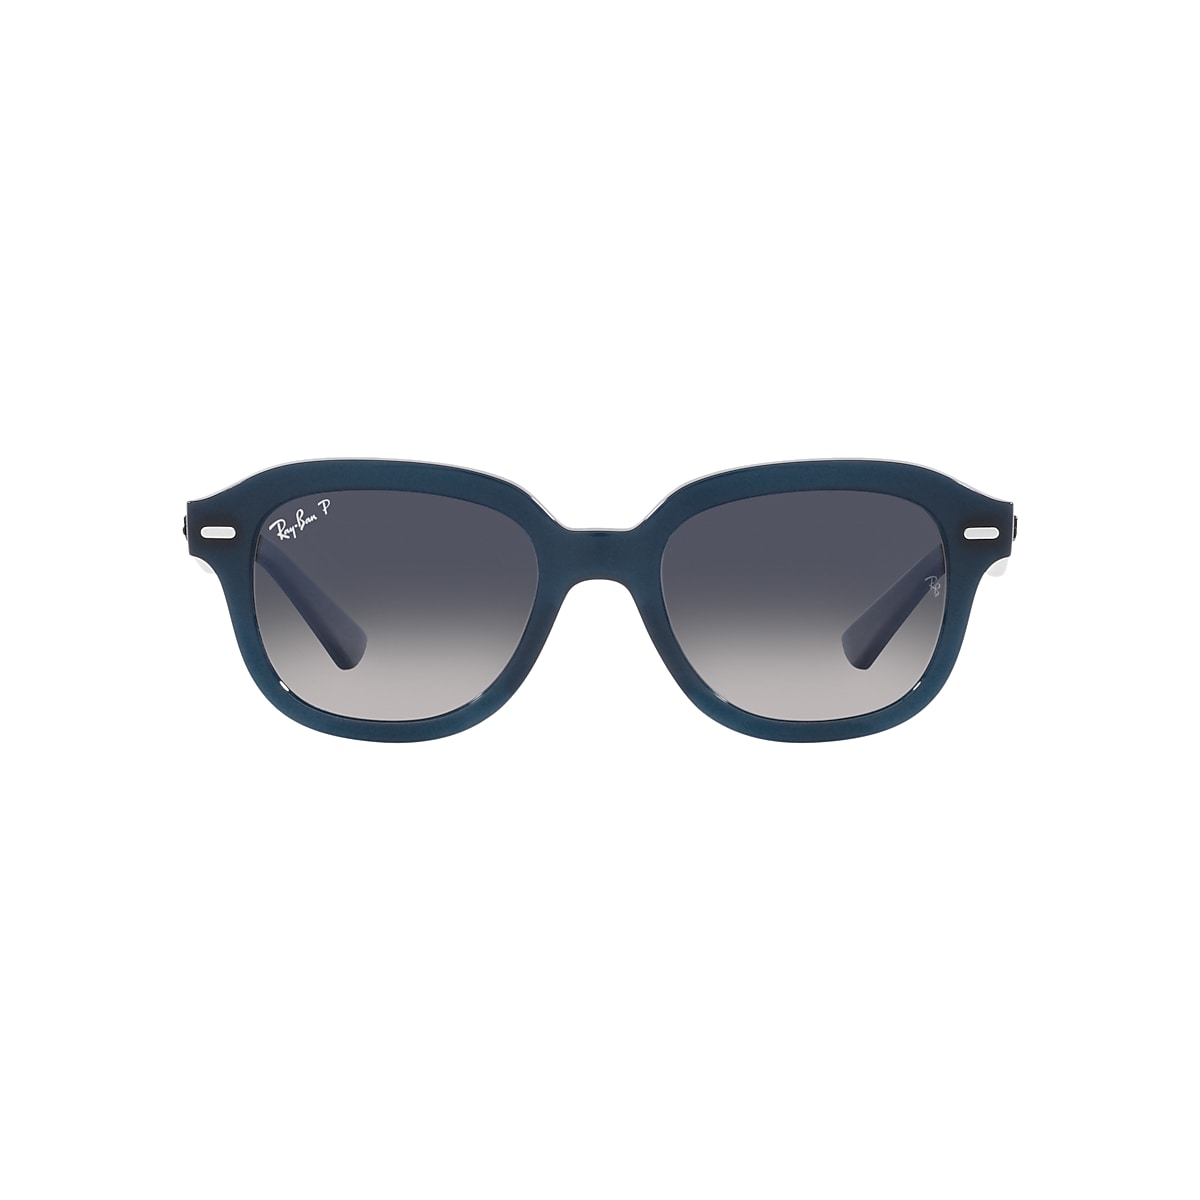 Polarized | Hut Sunglass & Dark Blue 53 RB4398 Blue Ray-Ban Sunglasses Opal USA Erik